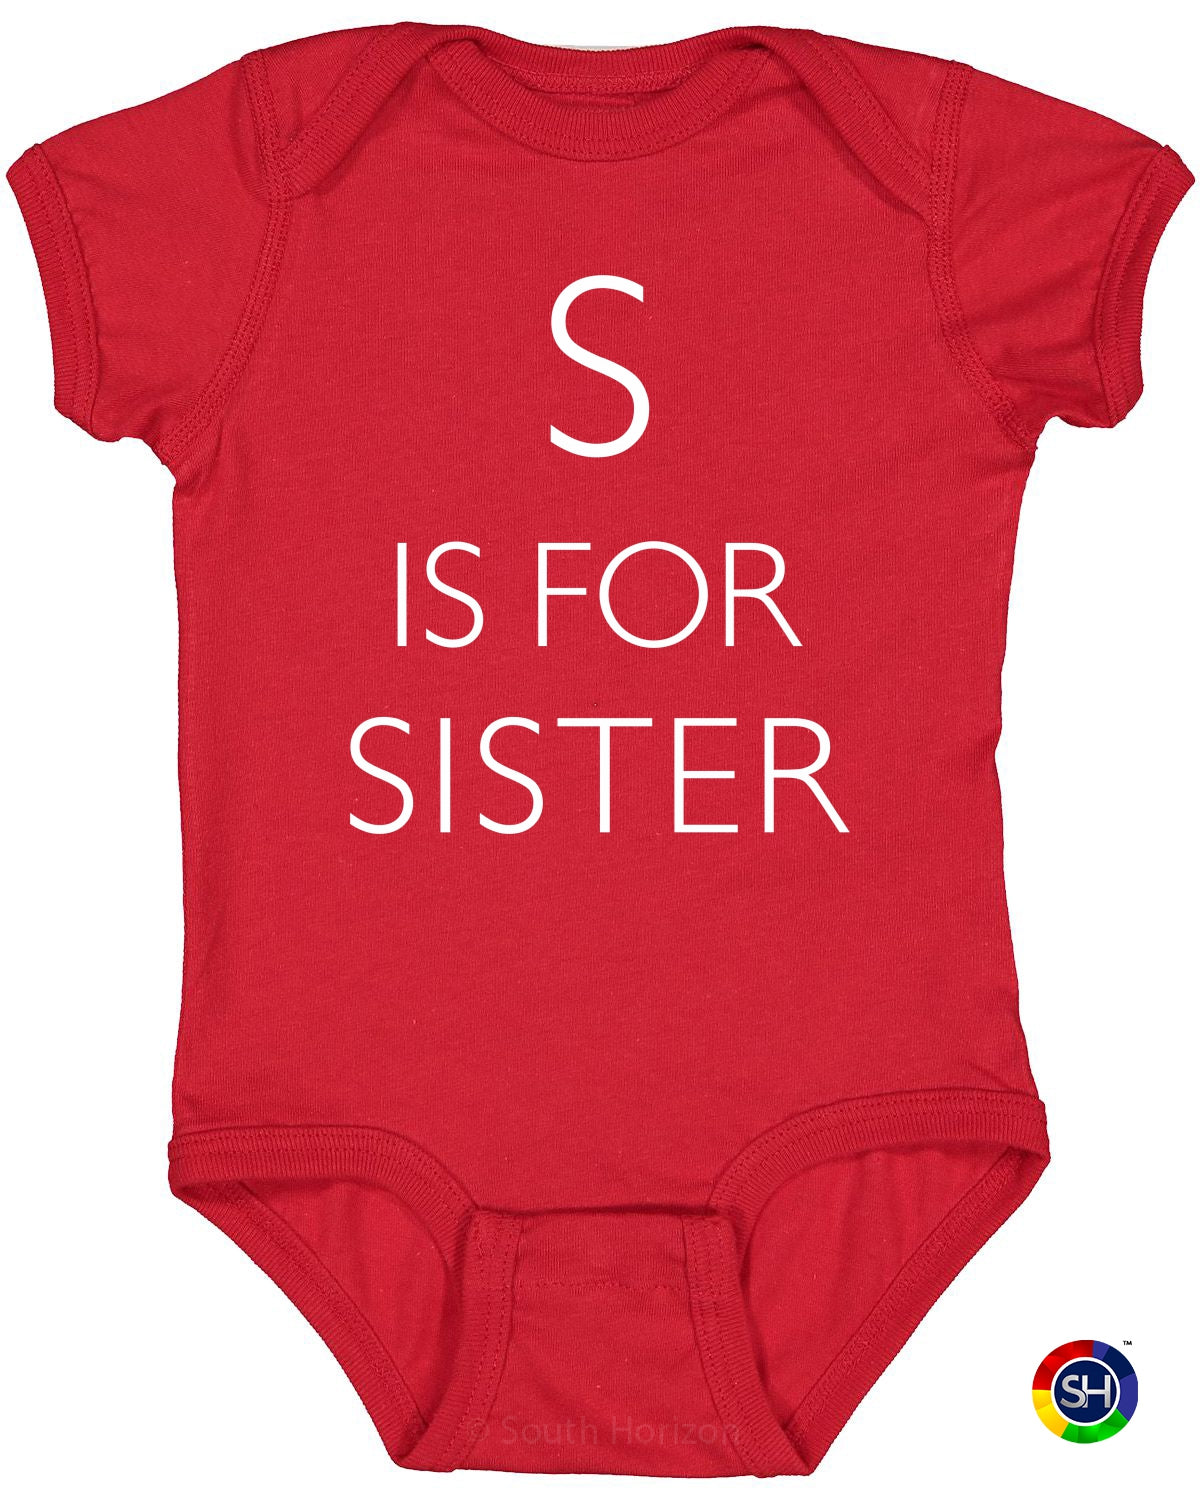 S is for Sister Infant BodySuit (#1159-10)